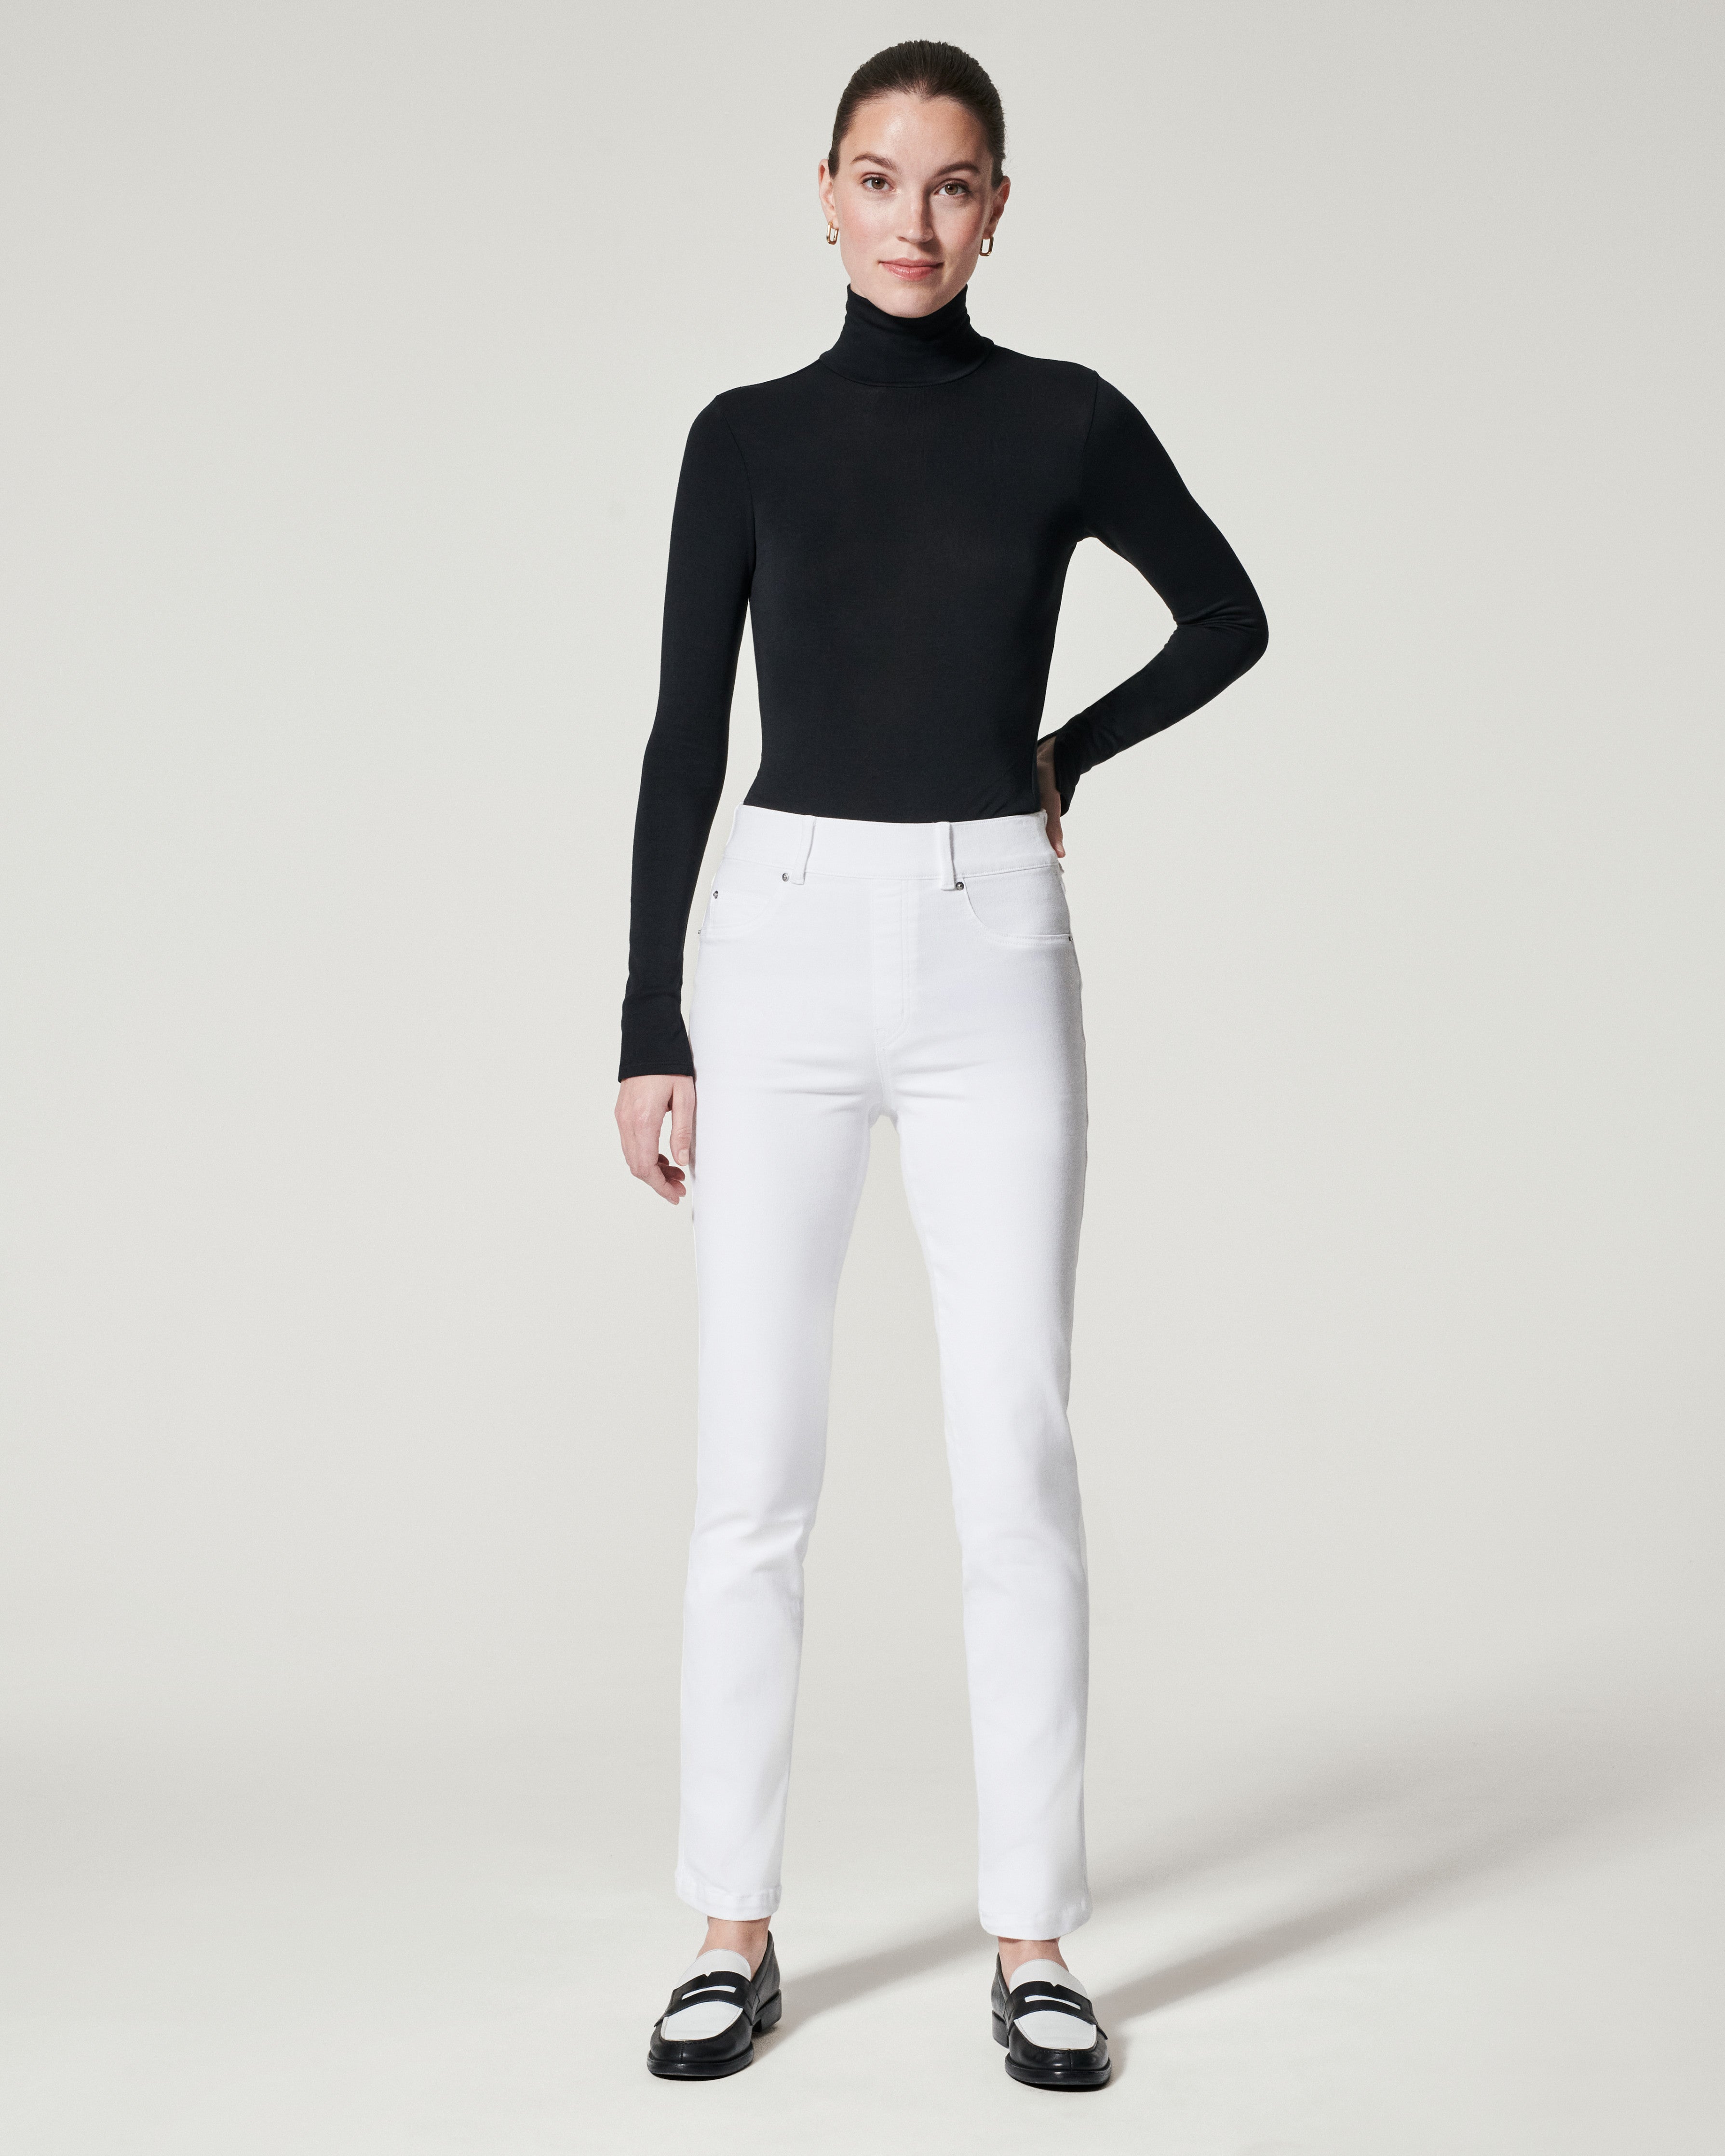 SPANX Women's White Skinny Jeans, White, X-Small 